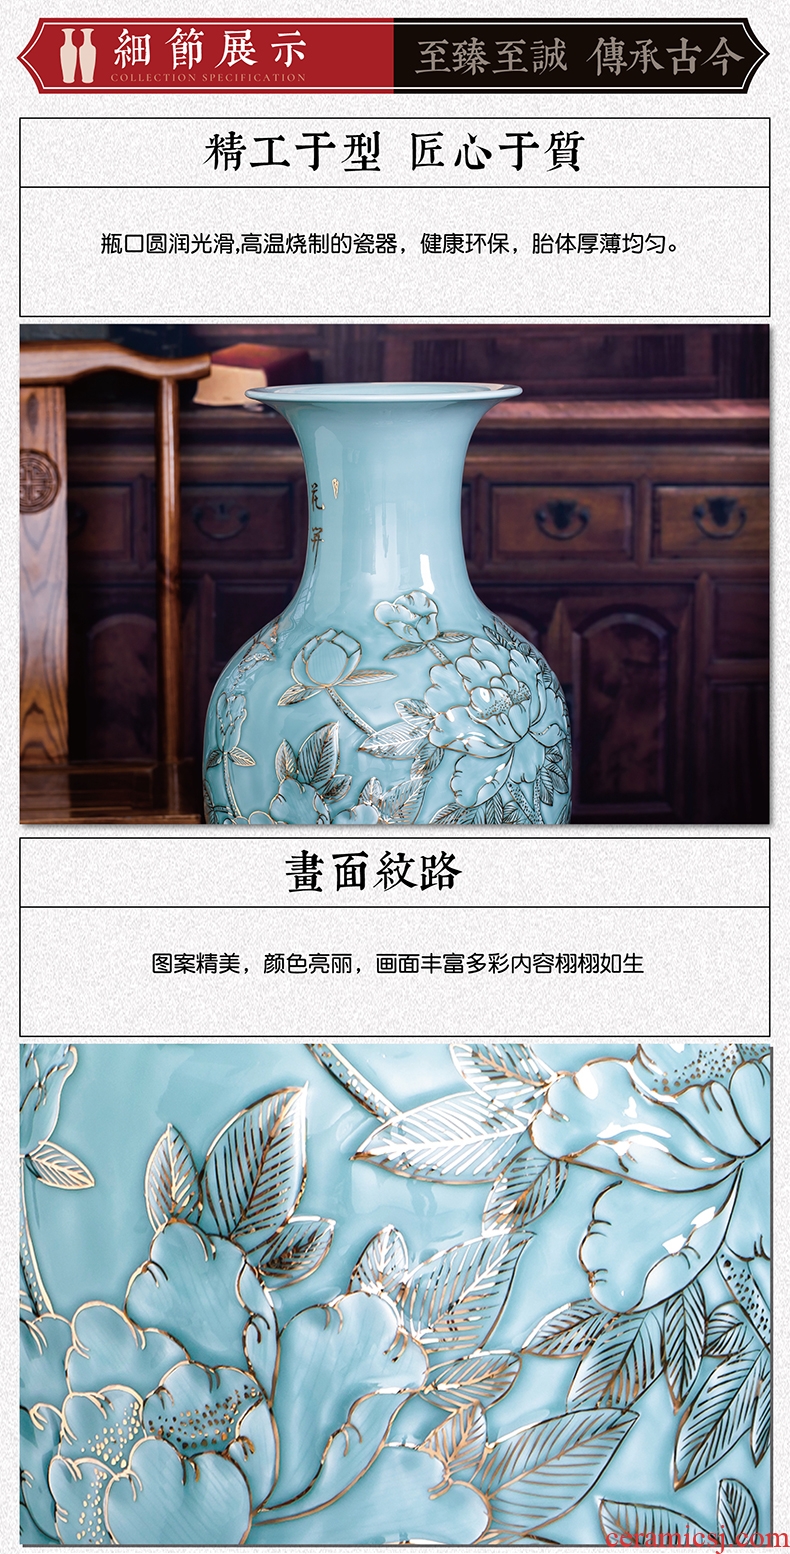 Jingdezhen ceramics landing large Chinese blue and white porcelain bottle gourd vase sitting room feng shui decorations furnishing articles - 599676994614